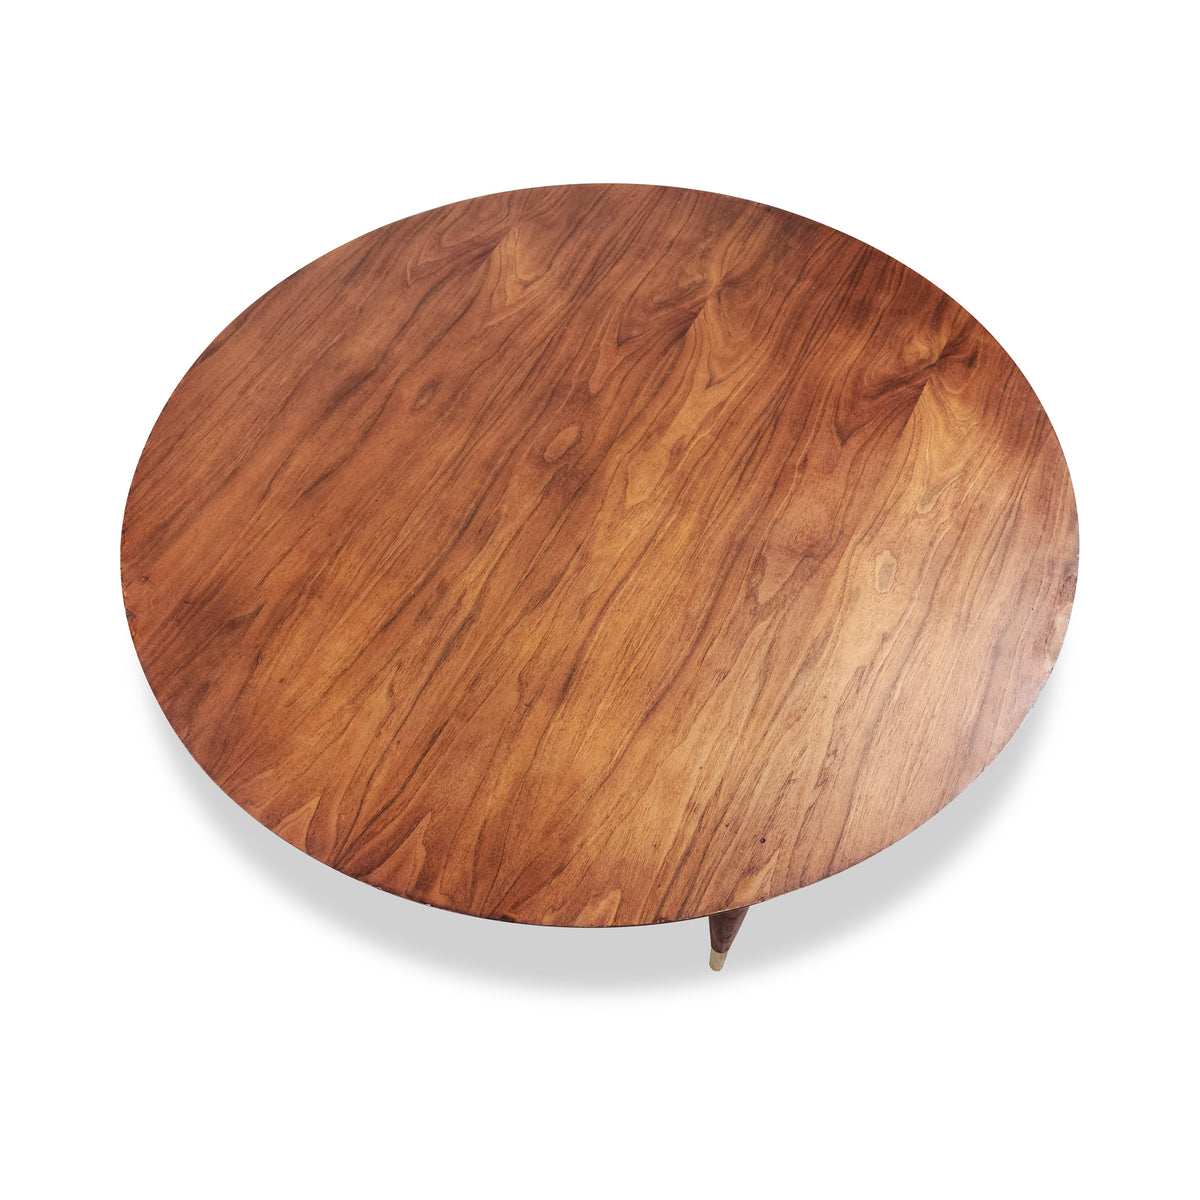 Walnut Round Coffee Table by Beaucraft